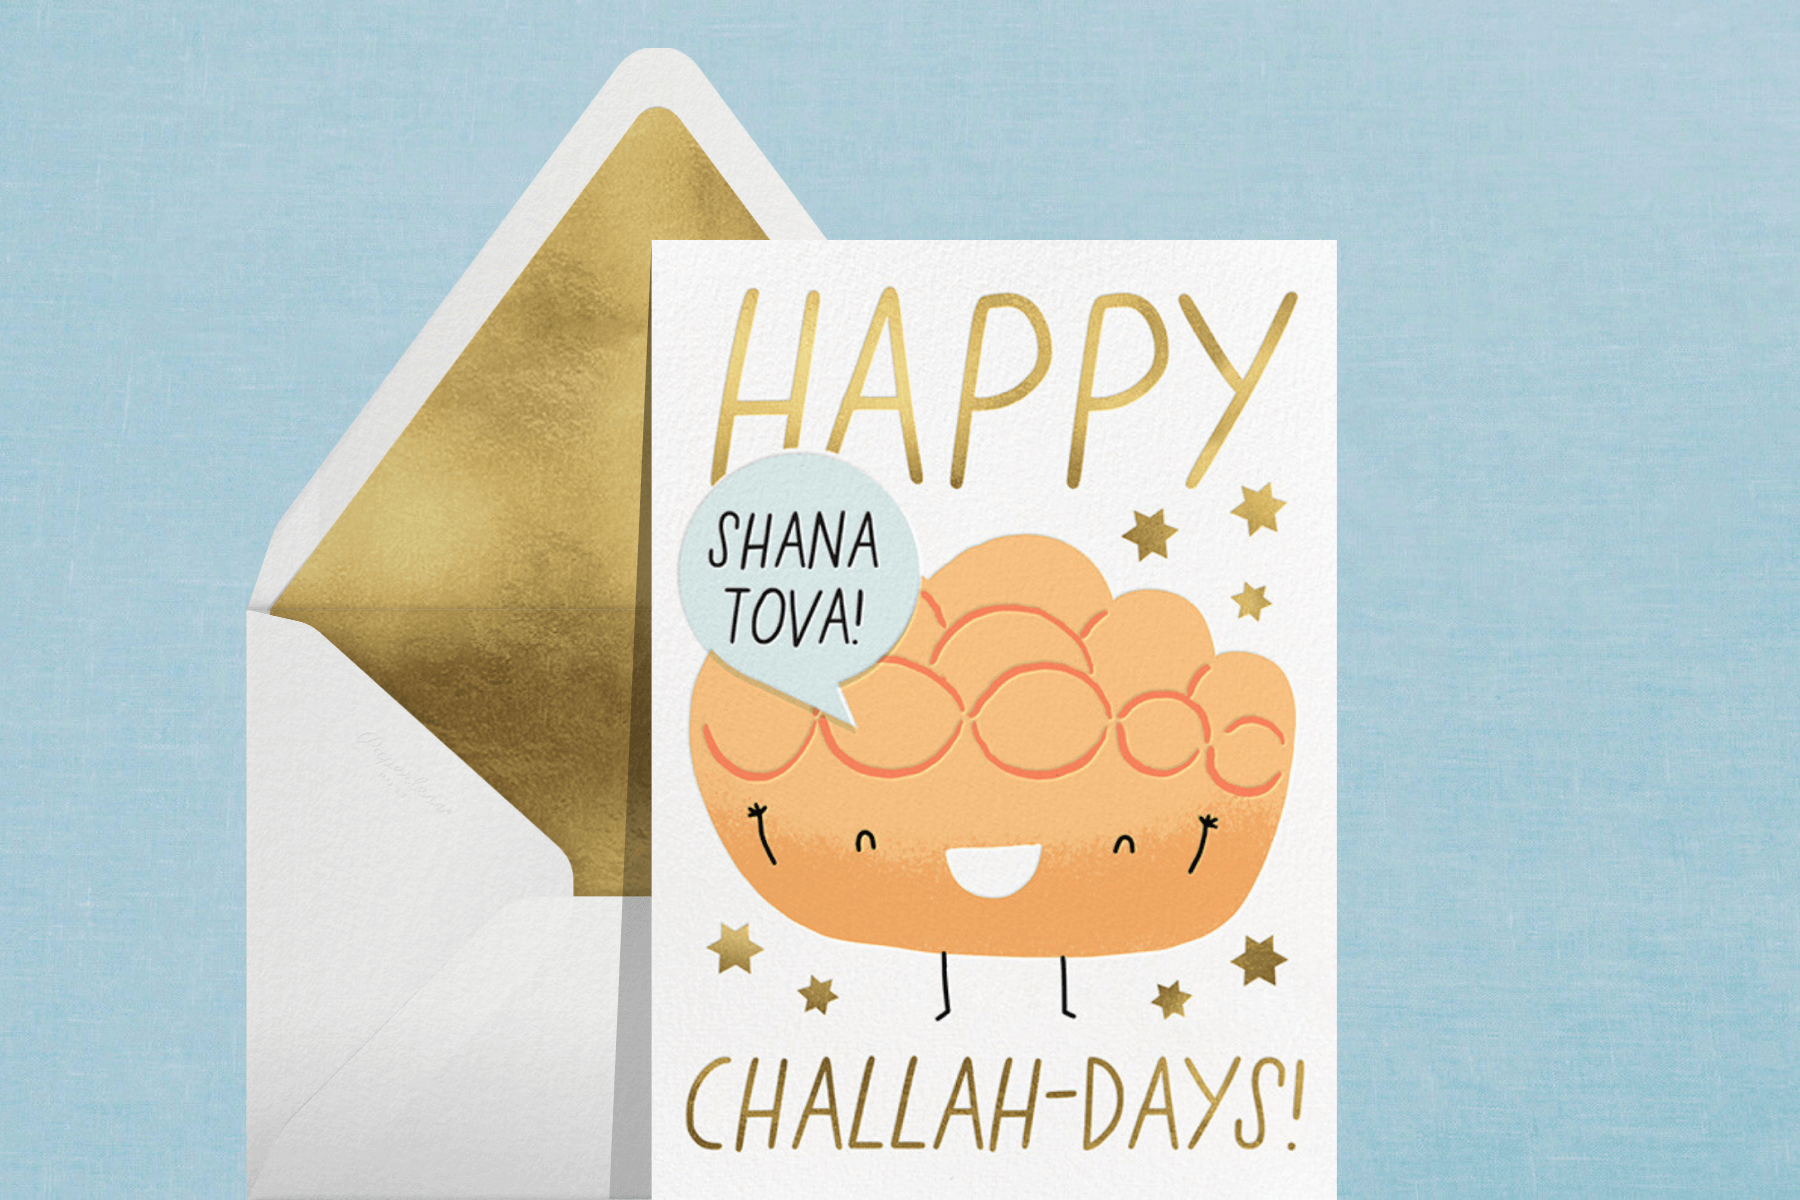 A Rosh Hashanah invitation with a cartoon smiling challah bread load saying “Shana tova” and the words “Happy challah-days!”